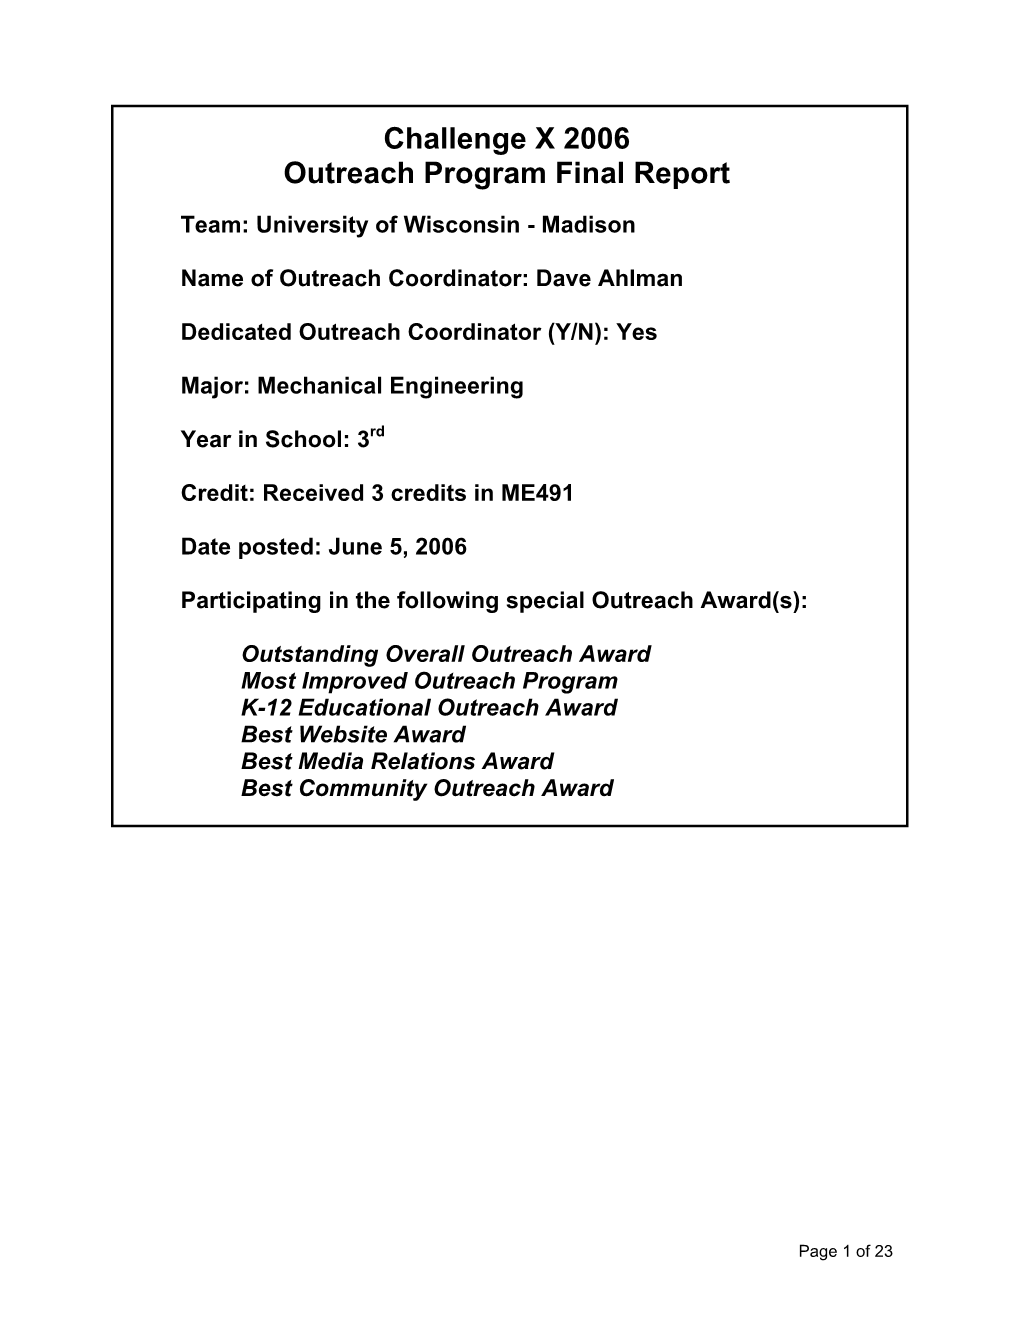 Challenge X 2006 Outreach Program Final Report